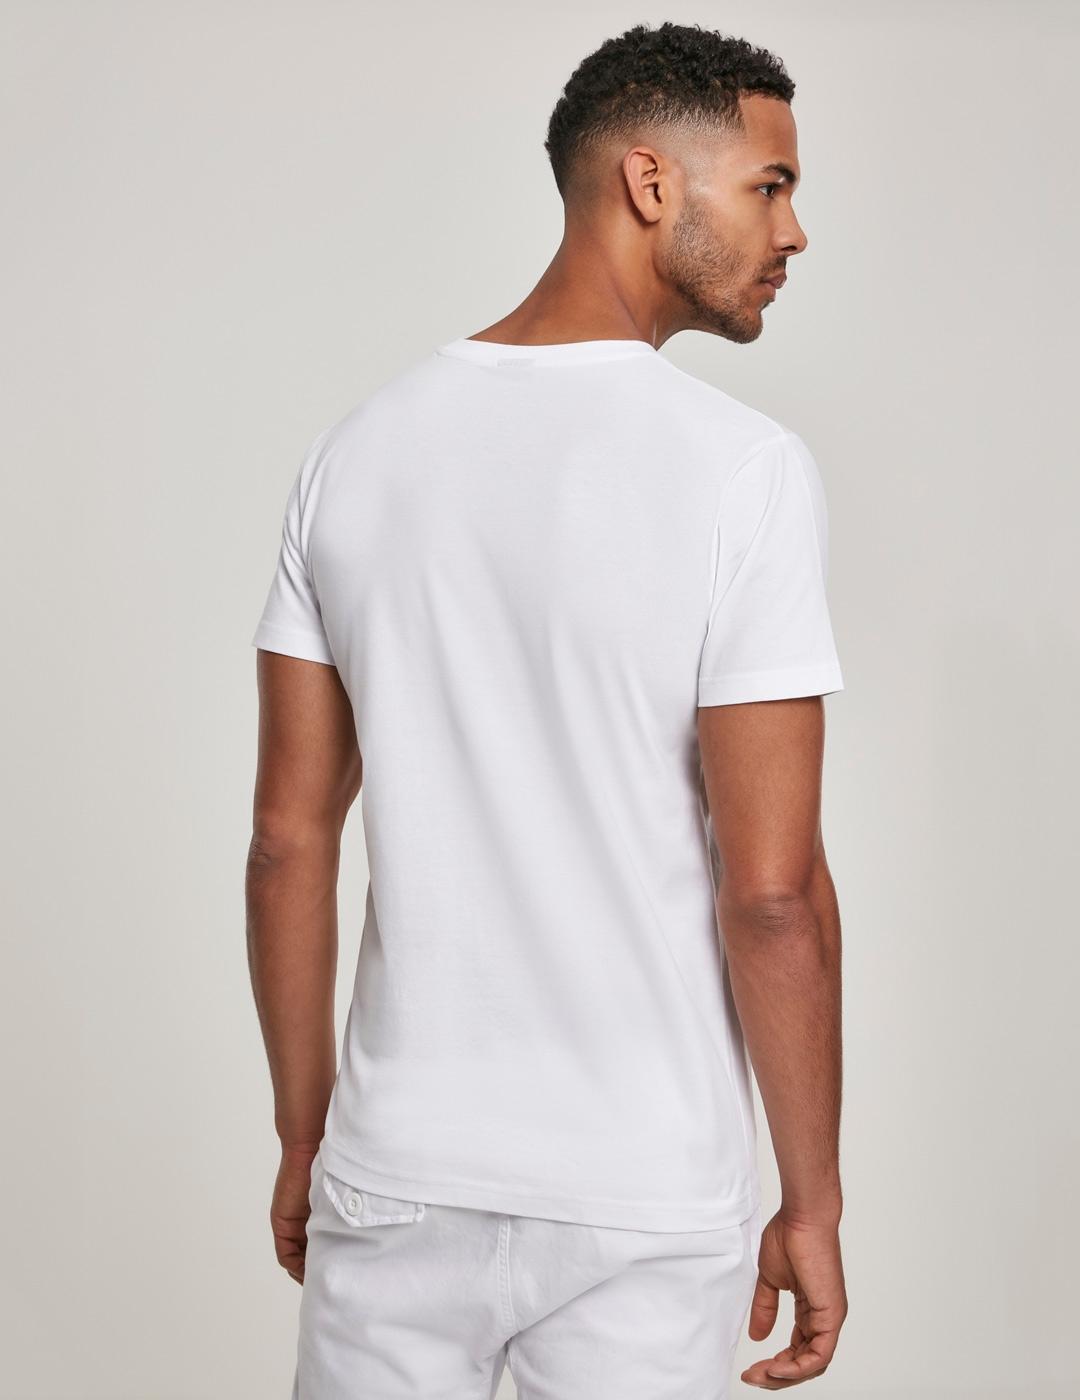 Camiseta MISTERTEE TUPAC AFTERGLOW - Blanco